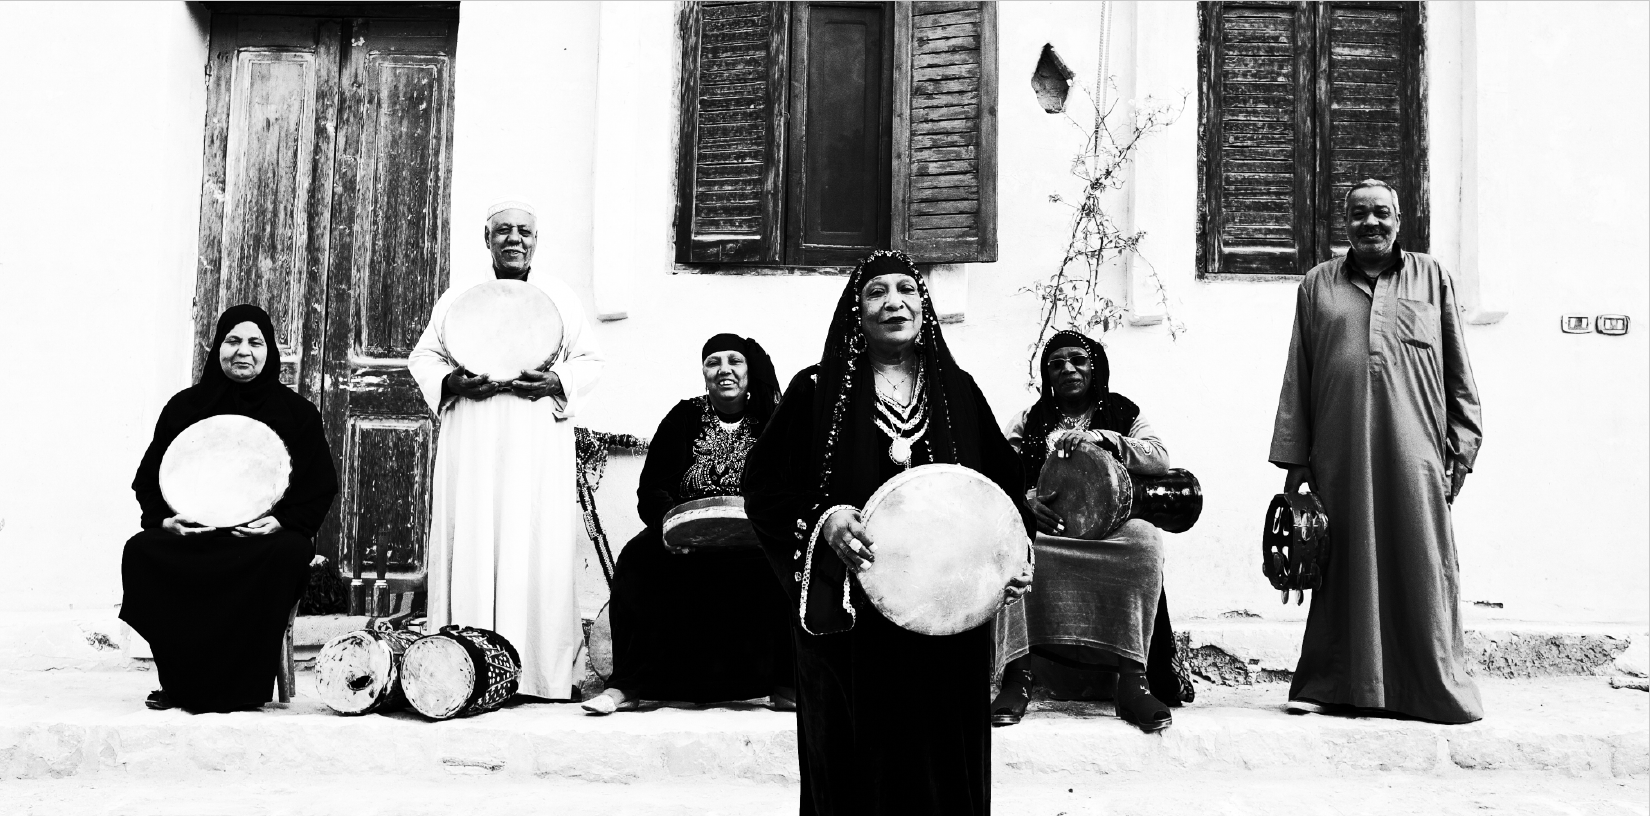 Watch a video portrait of Egyptian Zar ensemble Mazaher